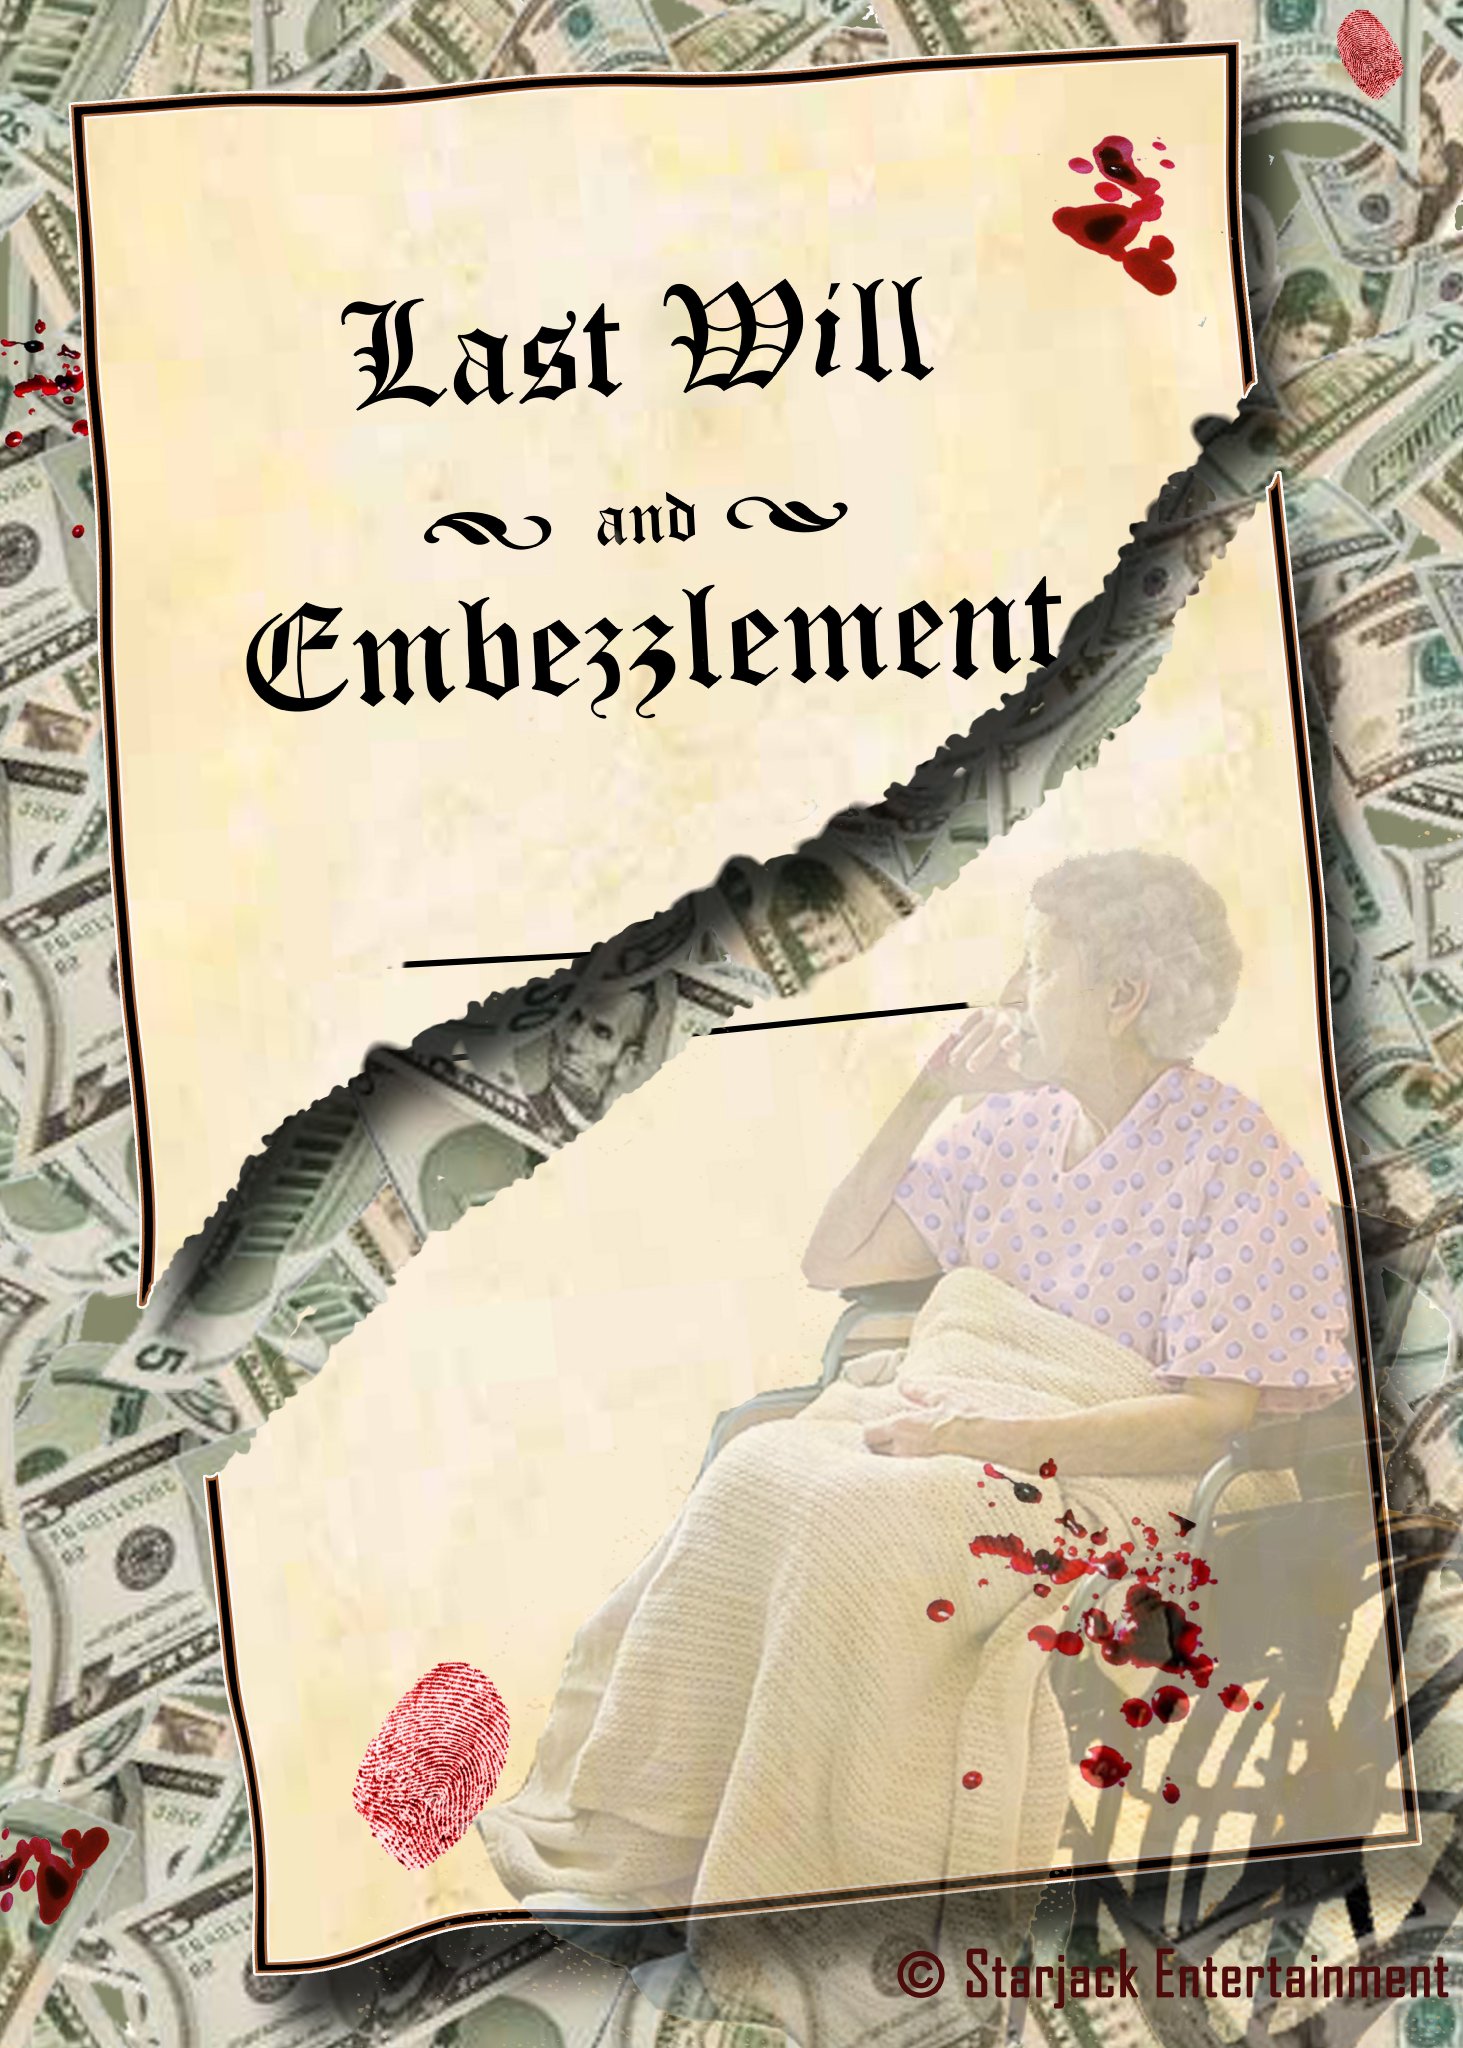 Фото - Last Will and Embezzlement: 1463x2048 / 419 Кб